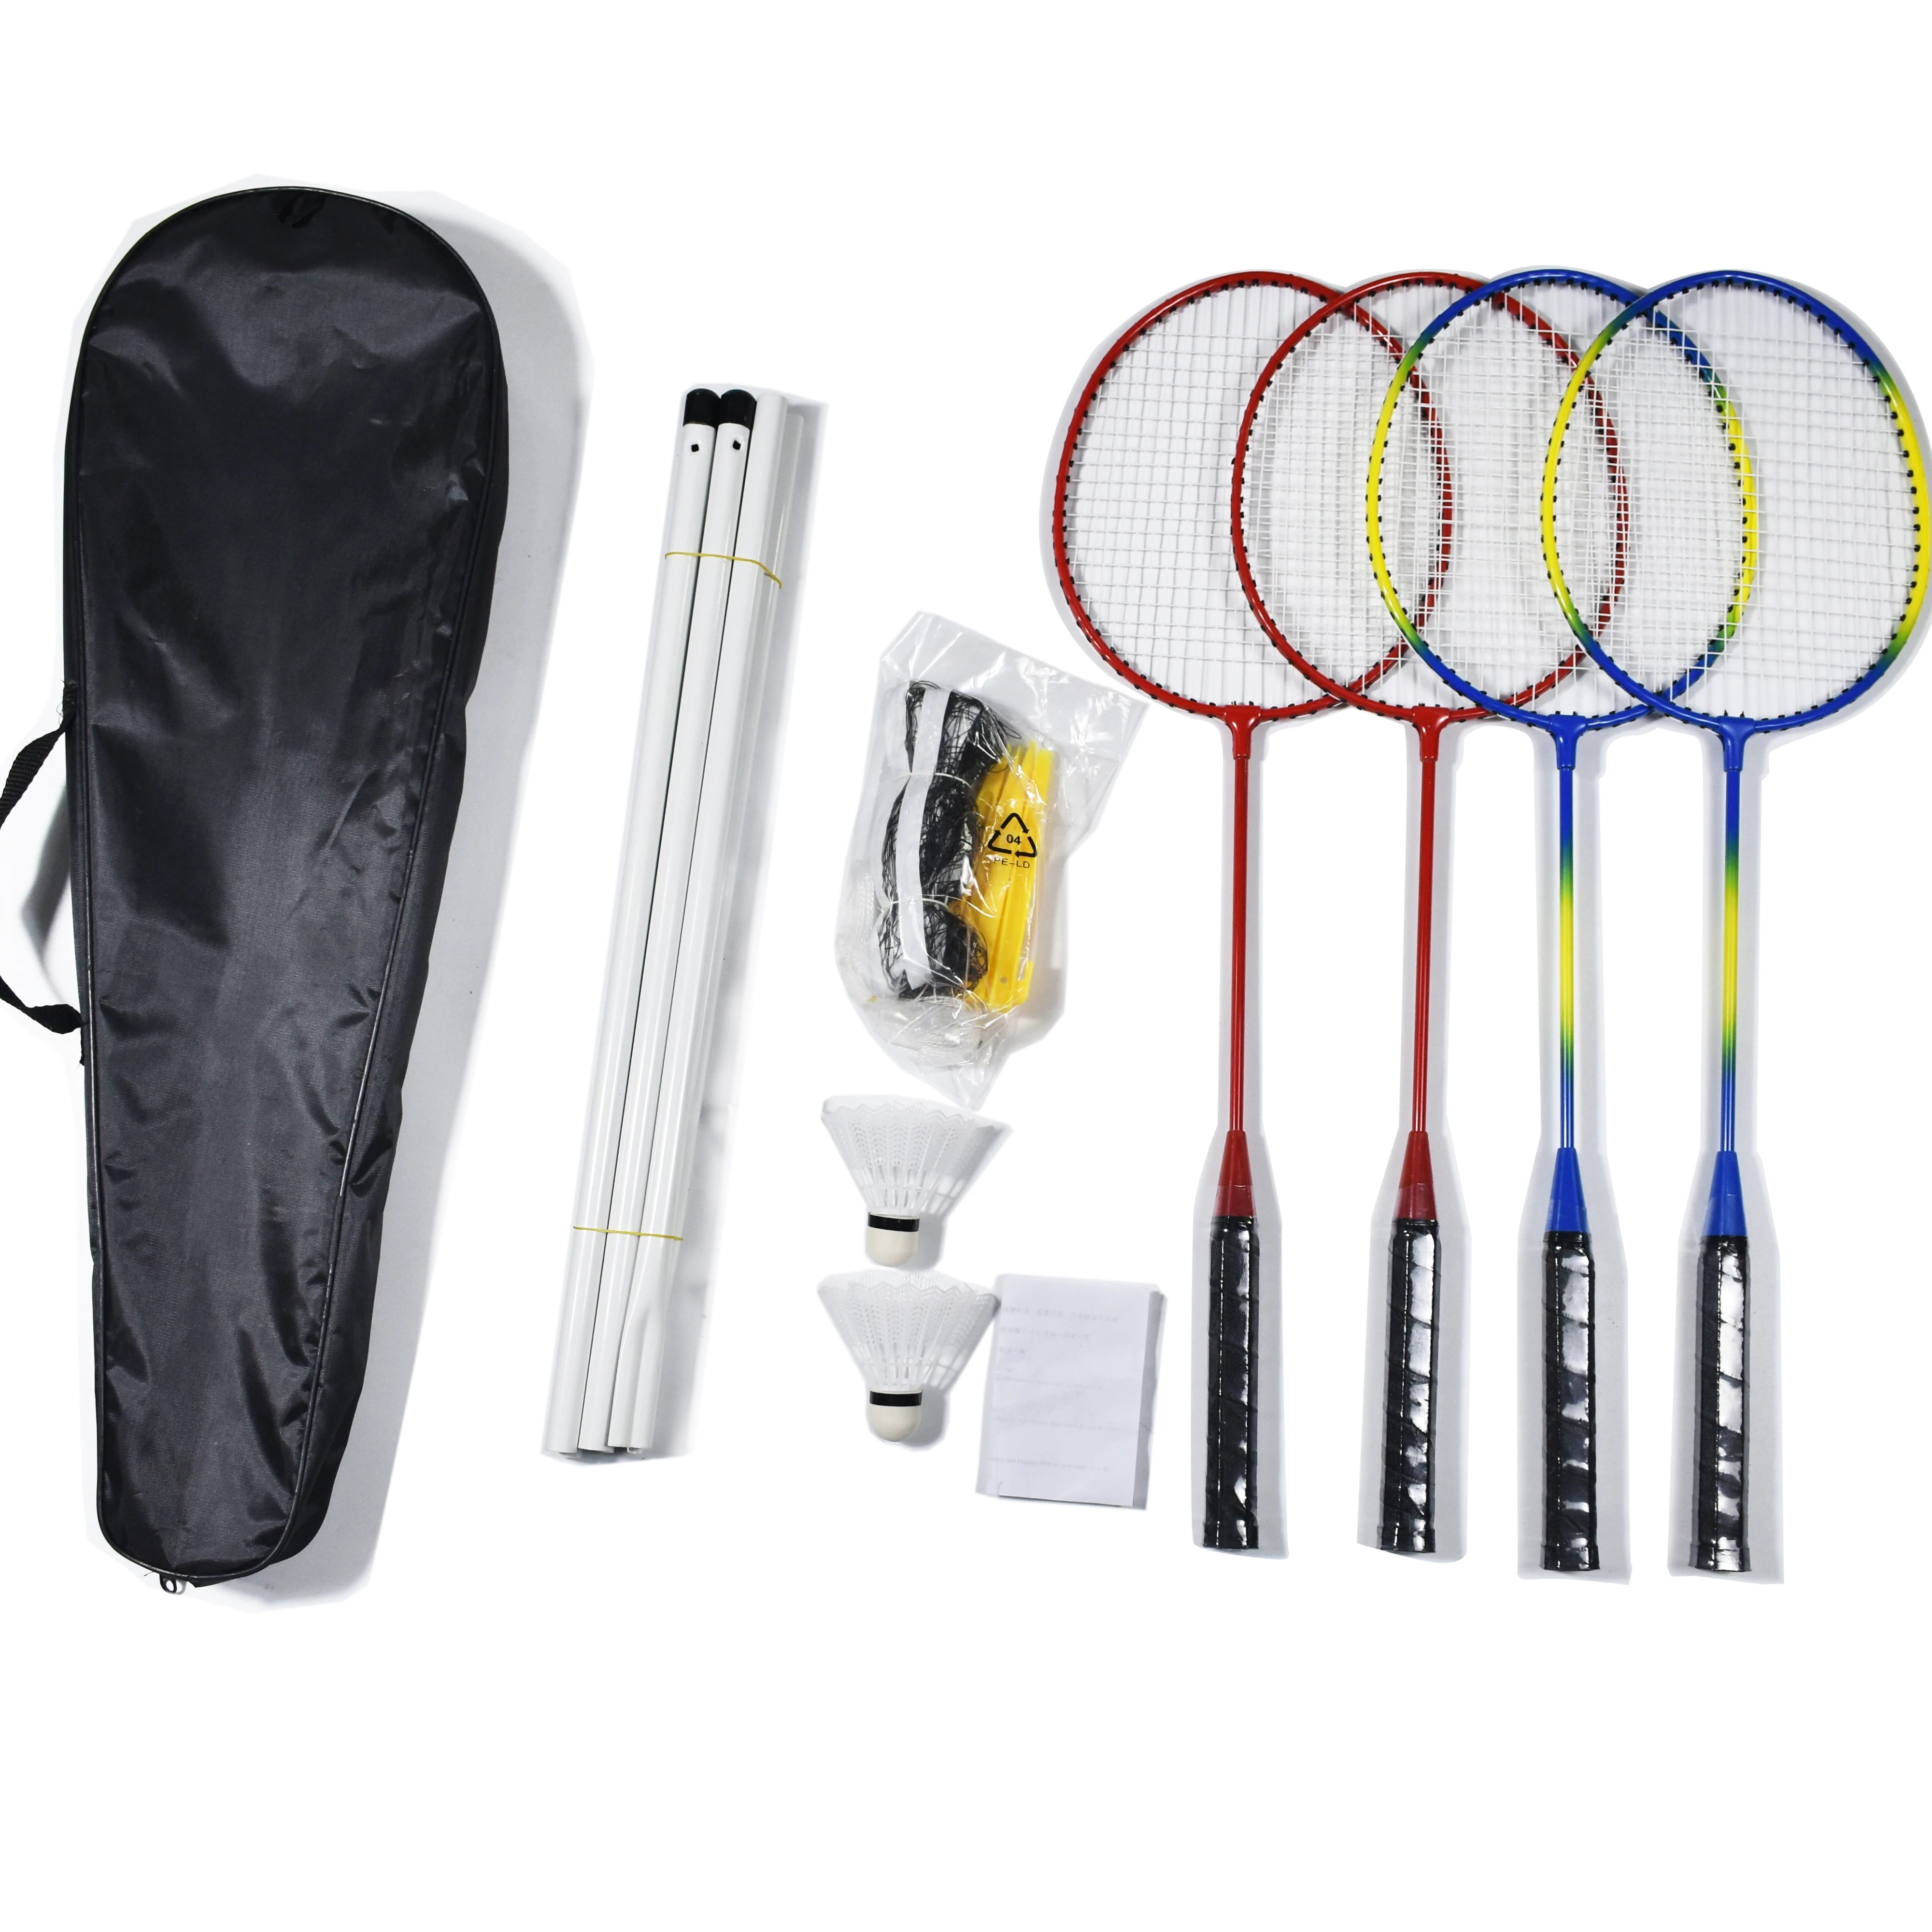 YONEX Leisure Badminton Combo Set for 4 Players for sale online 